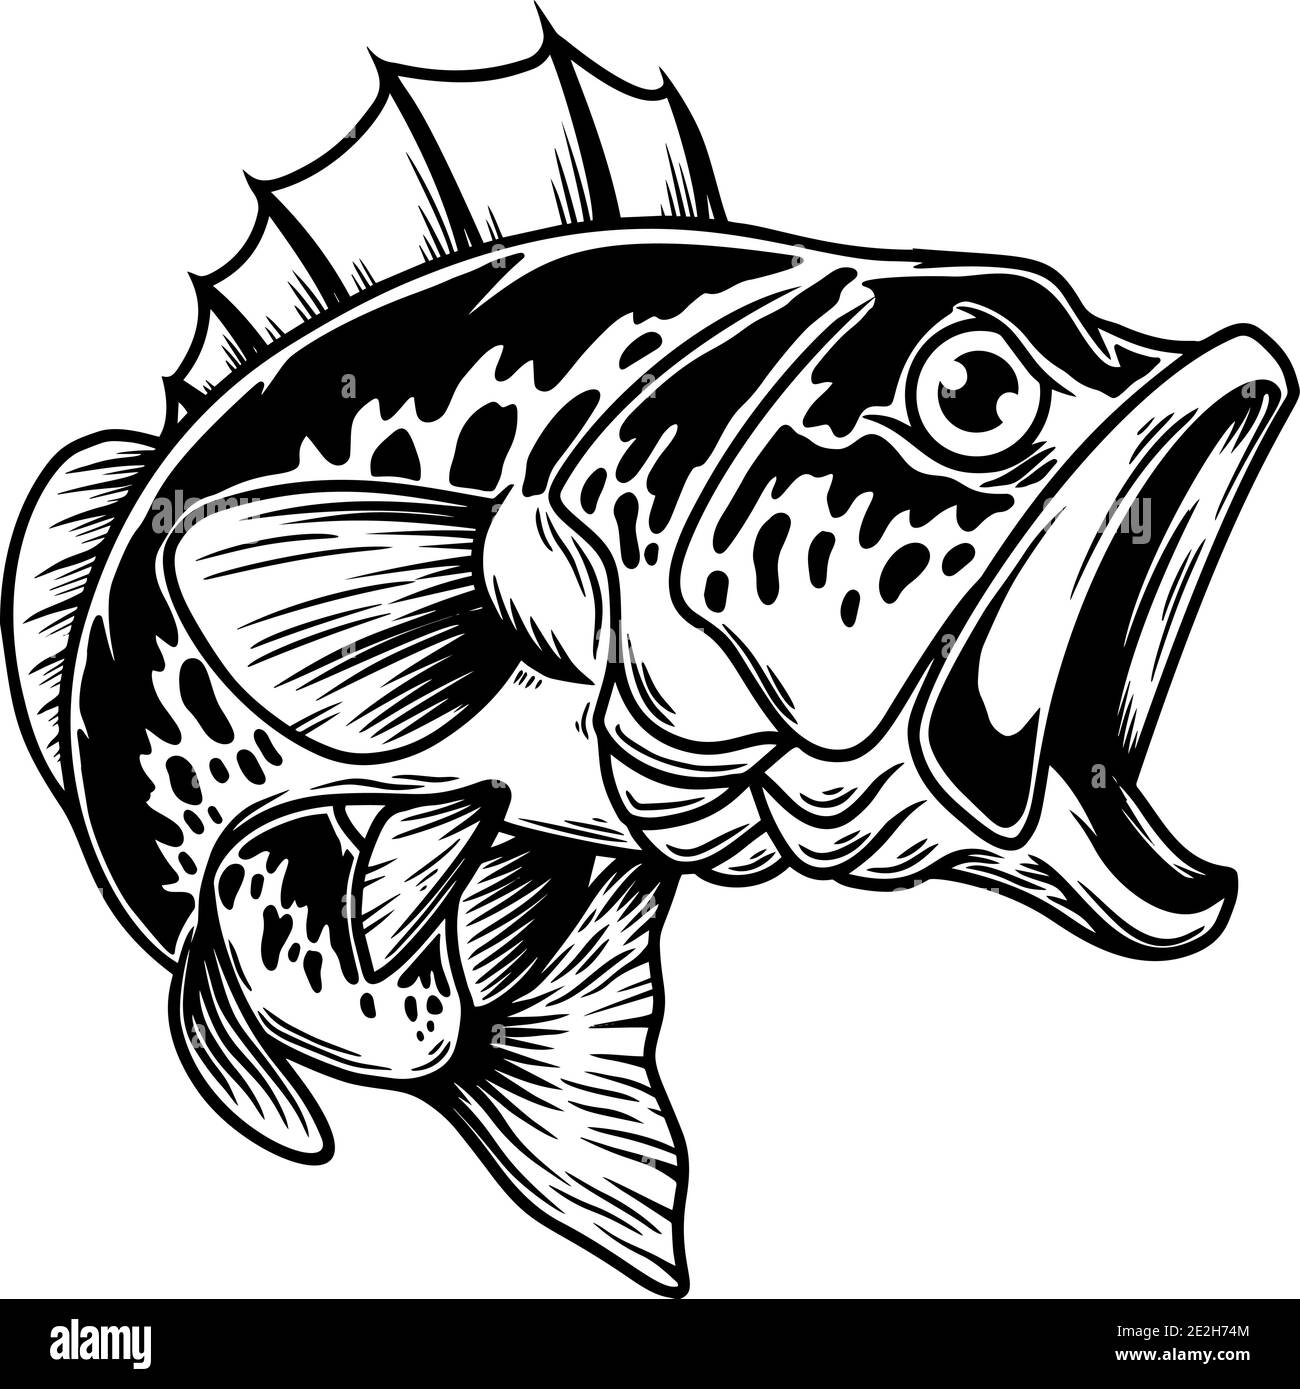 Illustration of bass fish. Big perch. Perch fishing. Design element for logo, emblem, sign, poster, card, banner. Vector illustration Stock Vector